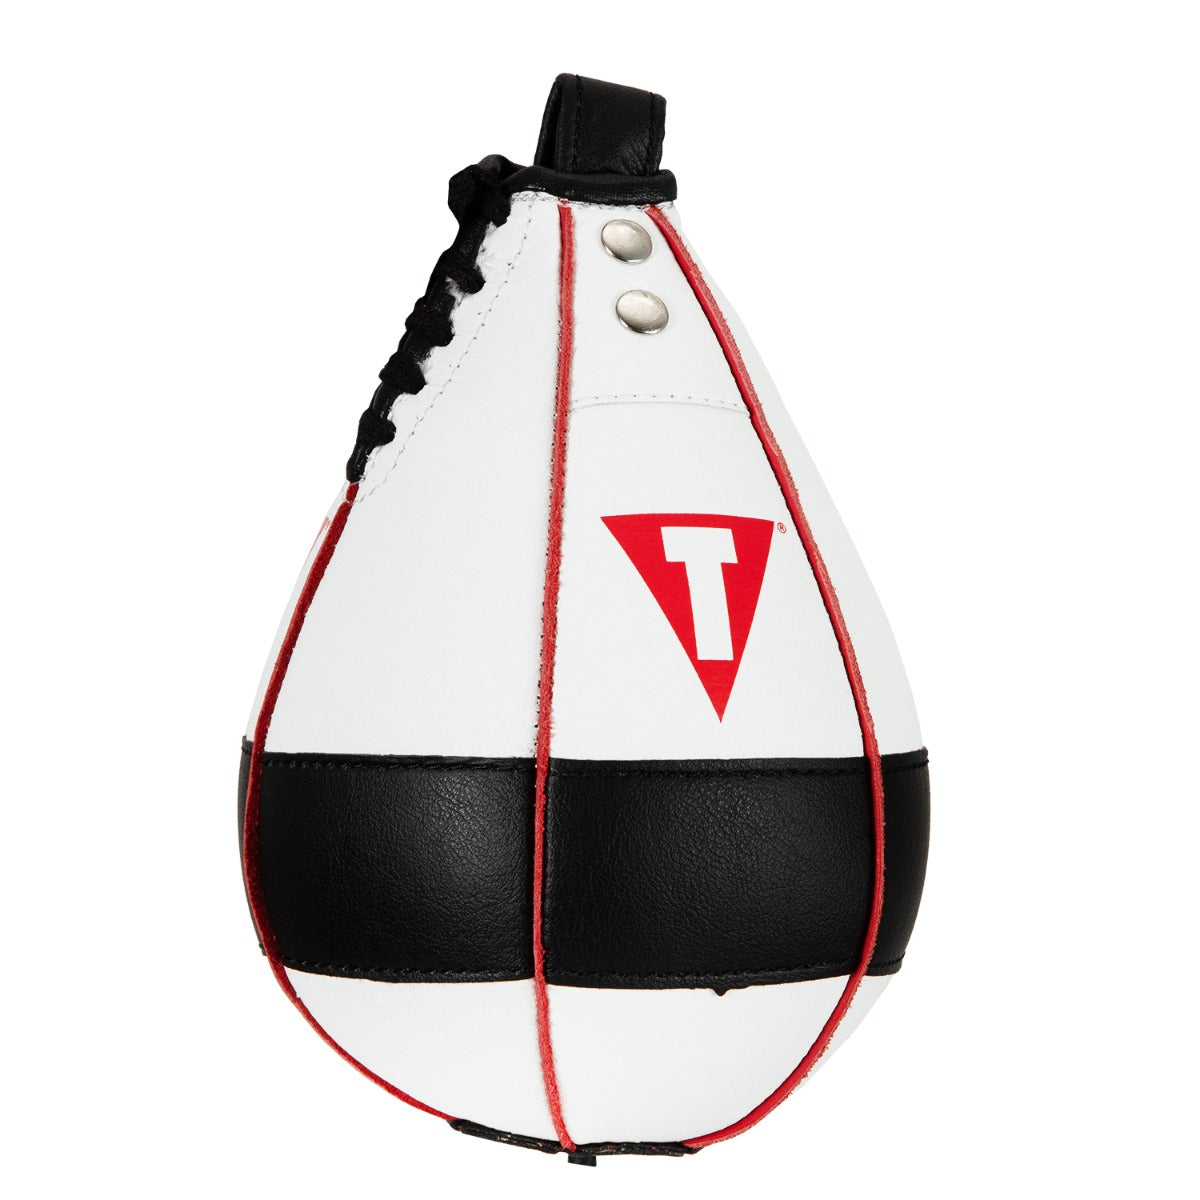 Speed Bags: Best Speed Bag Platform & Speed Bag Swivel | TITLE Boxing Gear